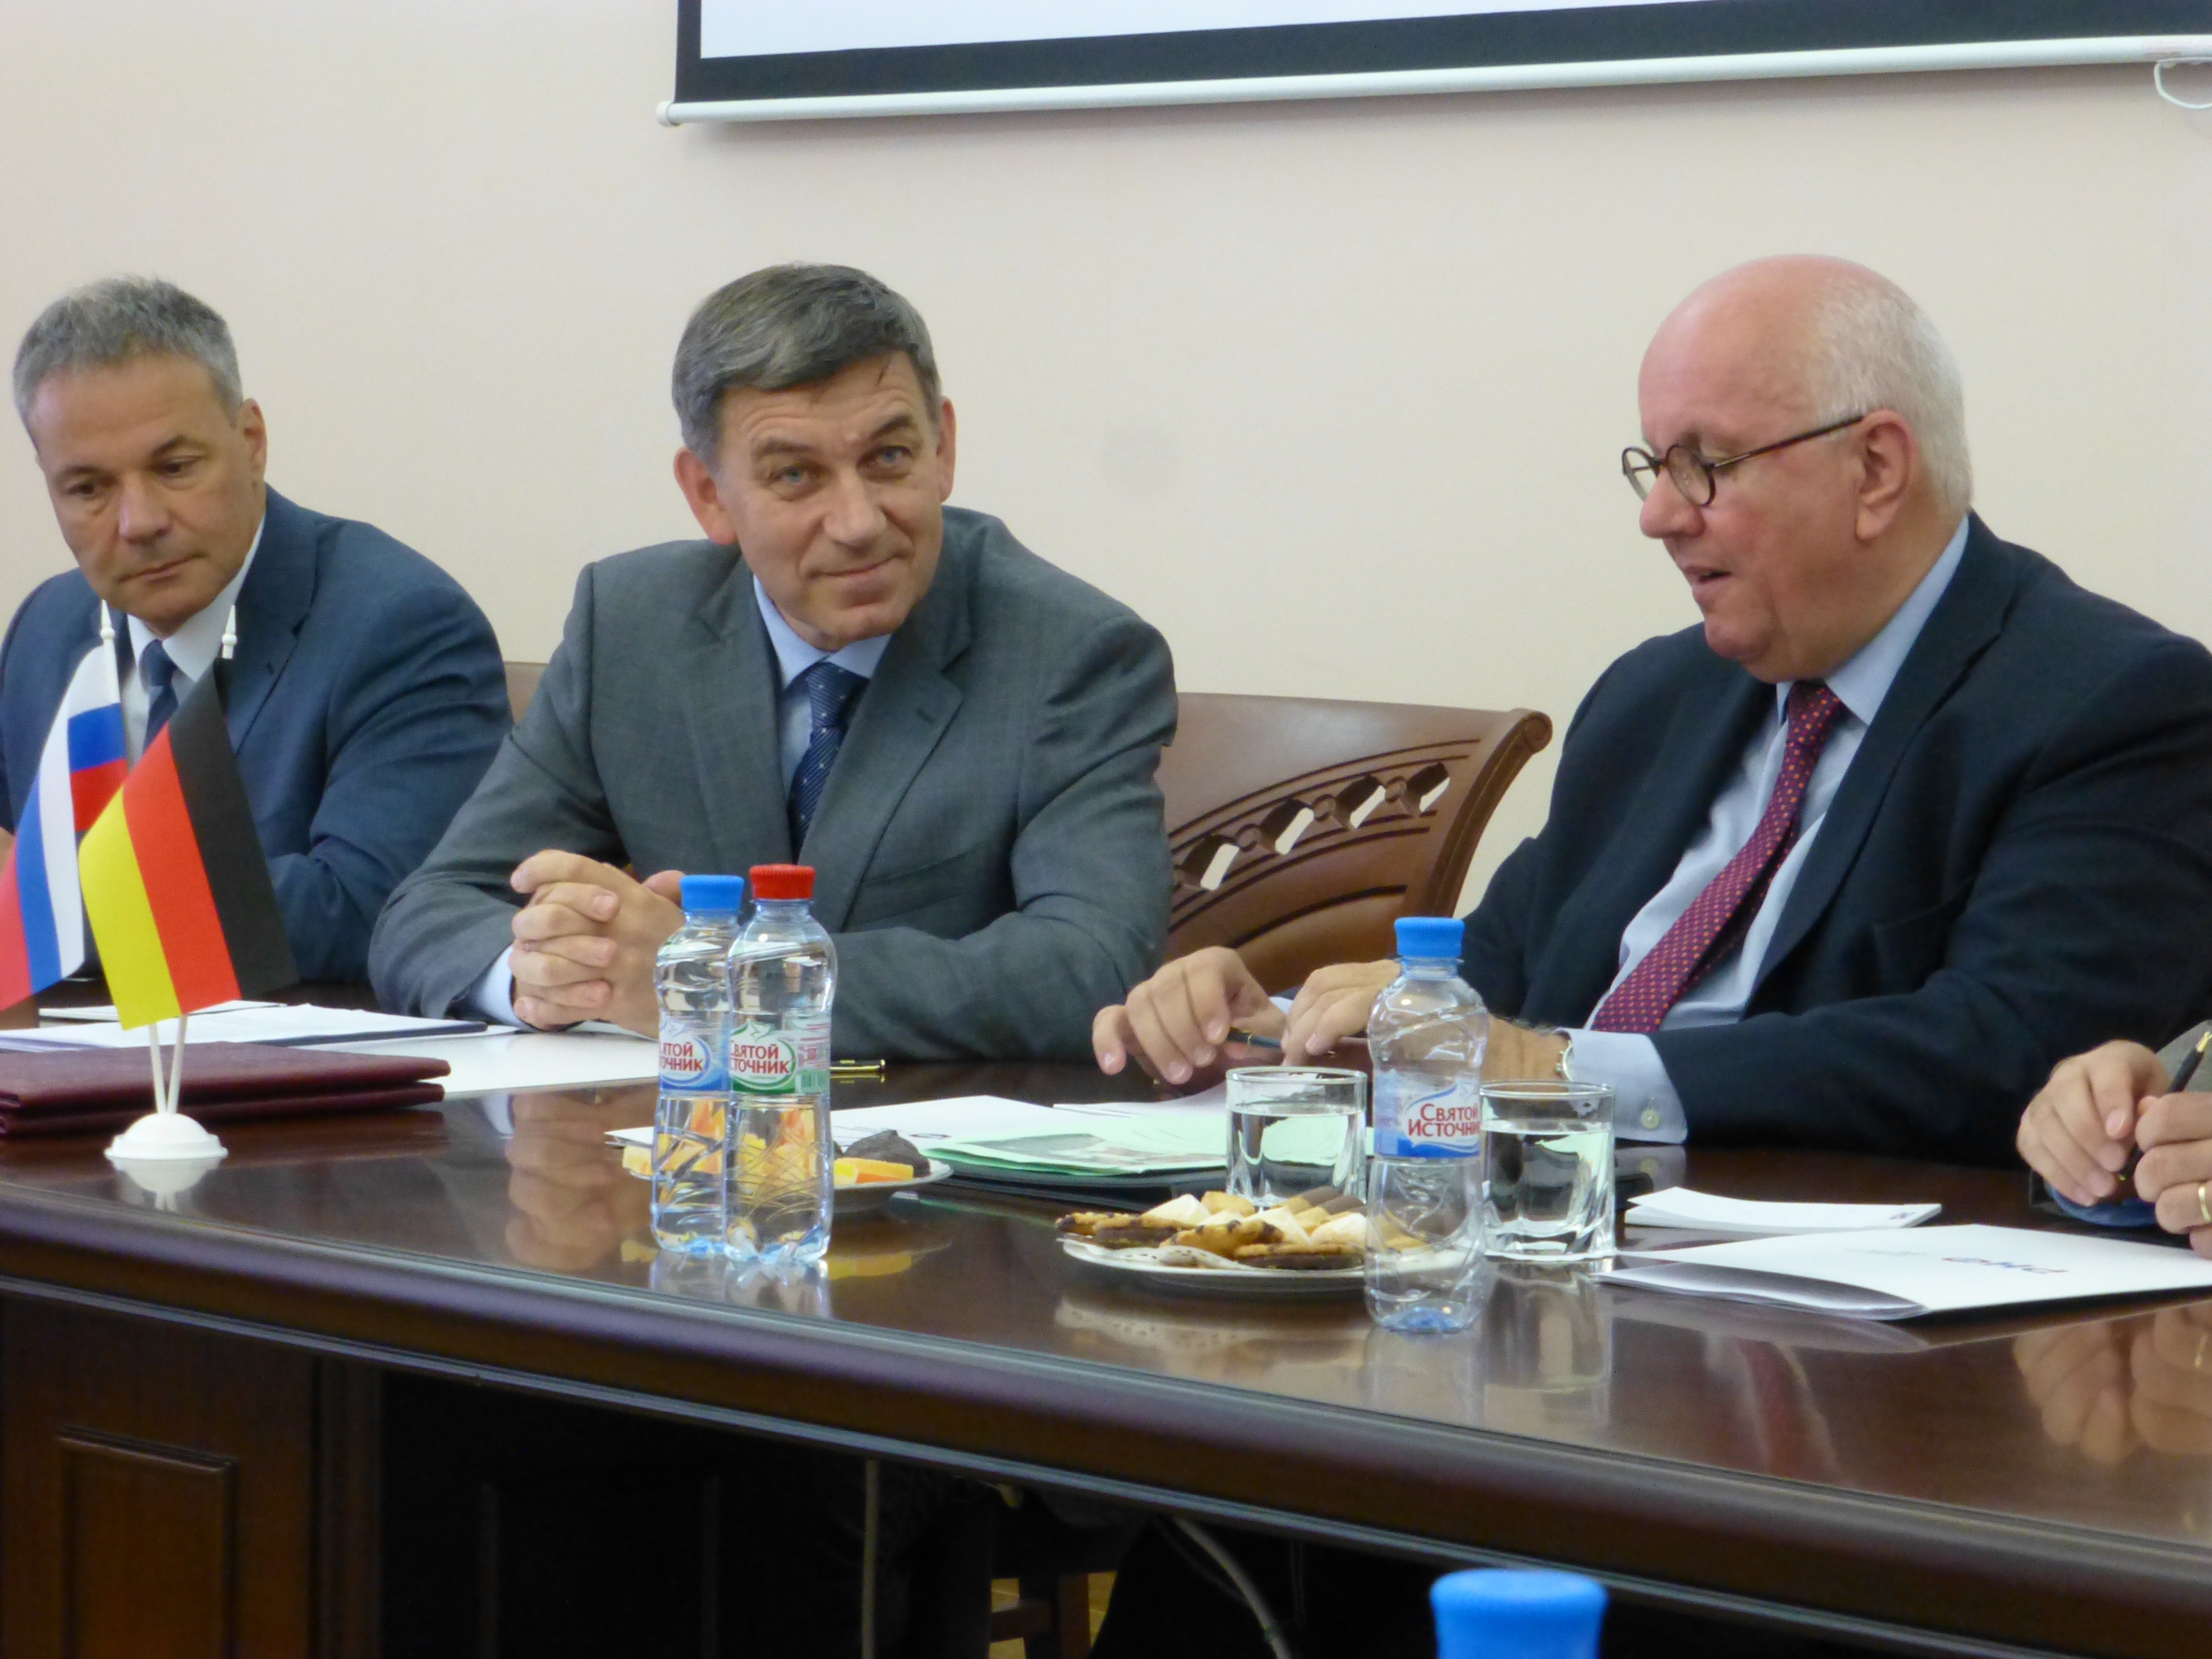 RSF-Generaldirektor Aleksandr Khlunov und DFG-Präsident Peter Strohschneider im Gespräch (links Stv. Direktor Jurij Simachev)